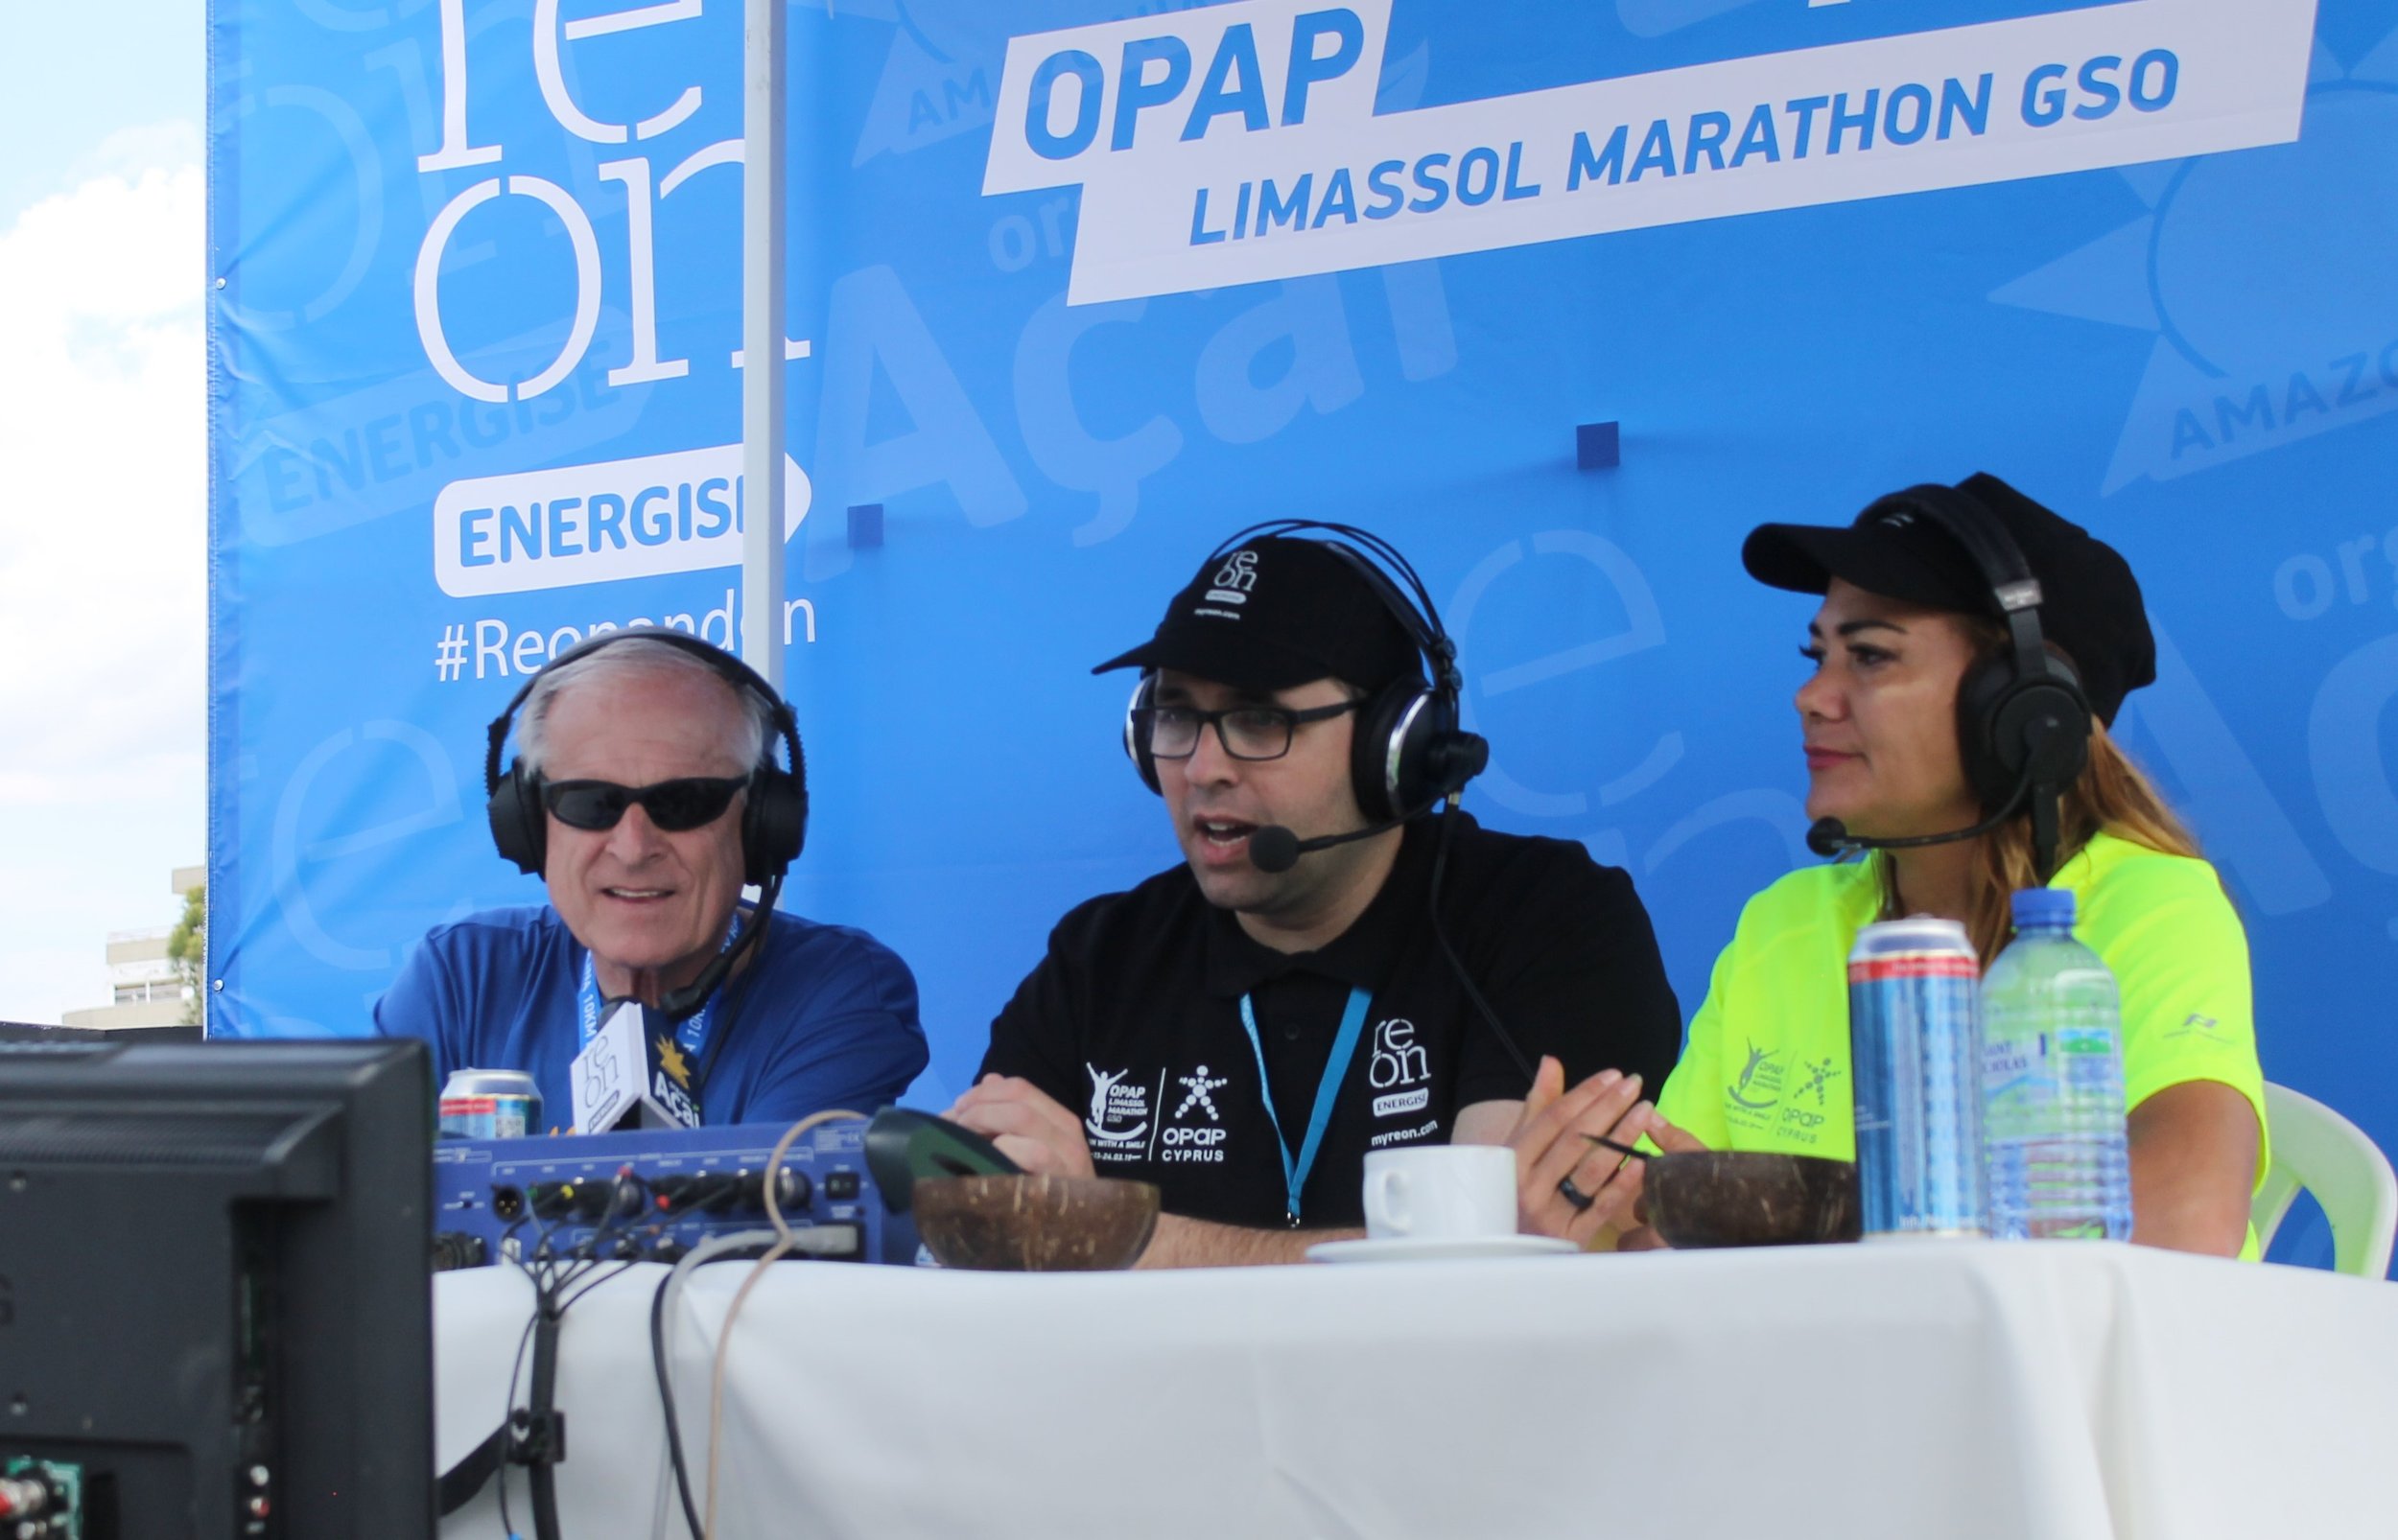 Tim Kilduff covering the Limassol Marathon